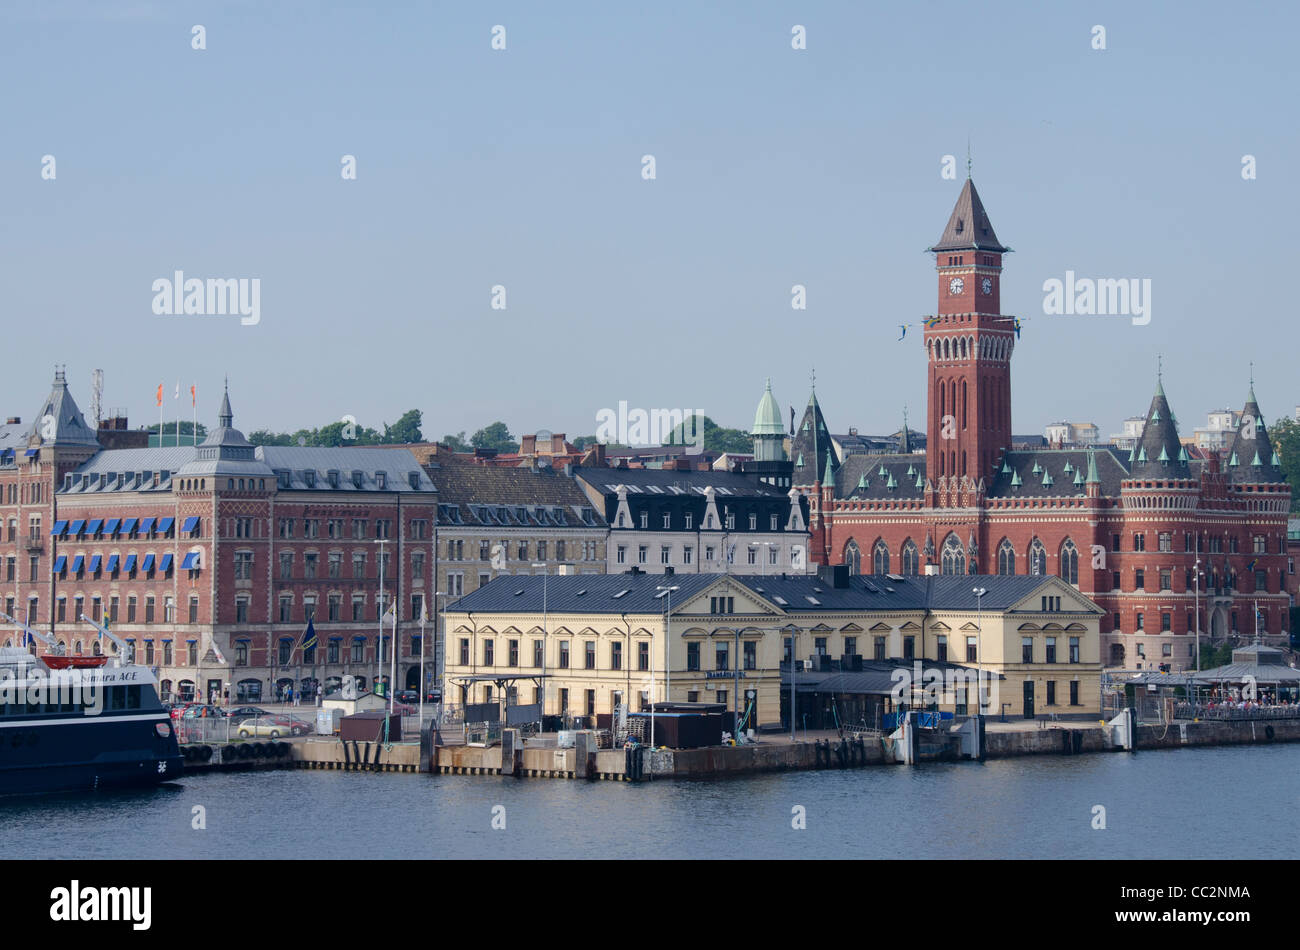 Schweden, Helsingborg. waterfront Hafen von Helsingborg Stockfotografie -  Alamy